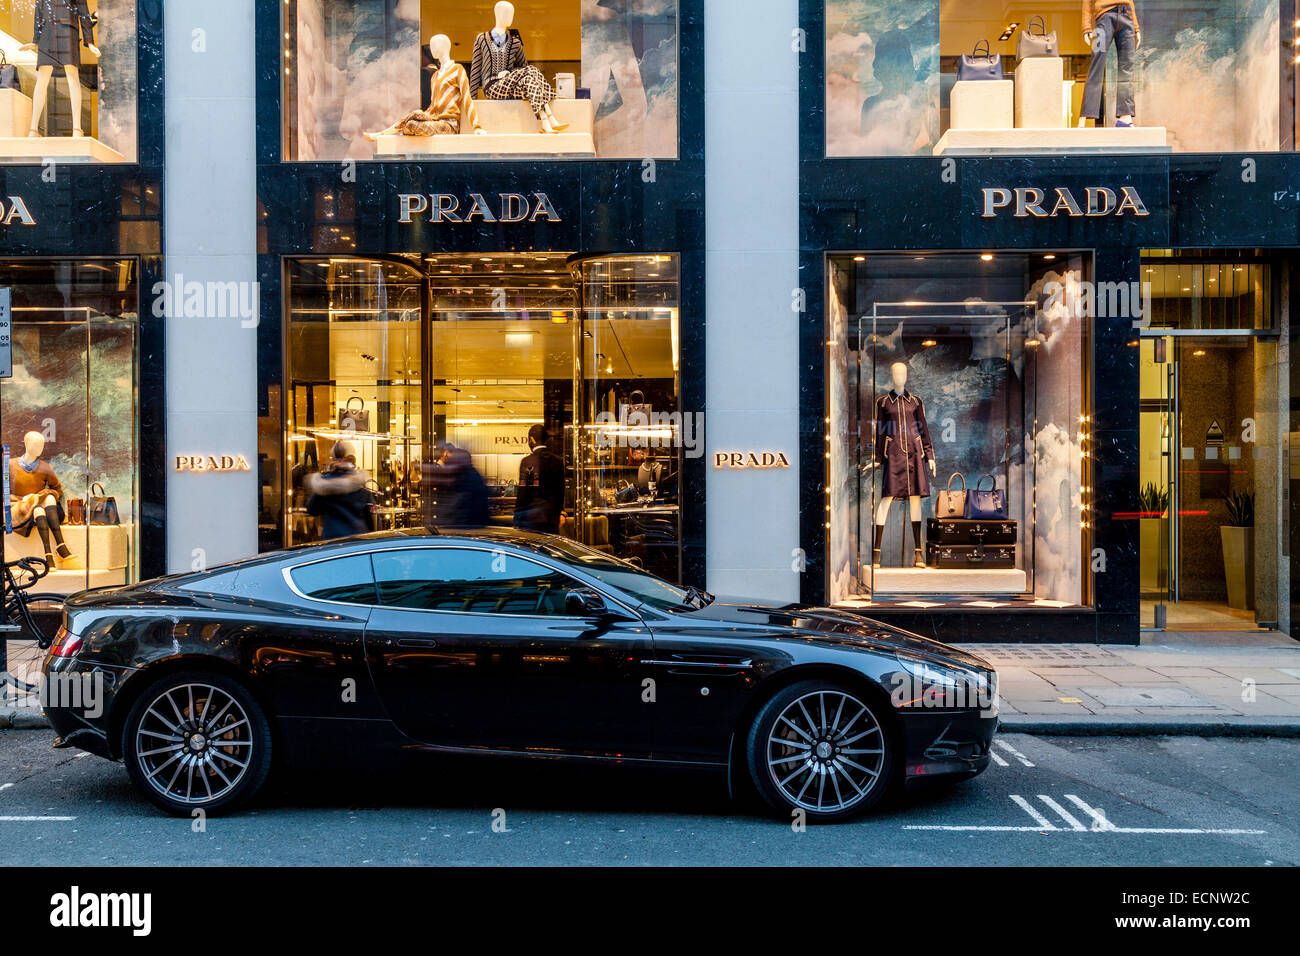 The Prada Store In Old Bond Street, London, England Stock Photo - Alamy